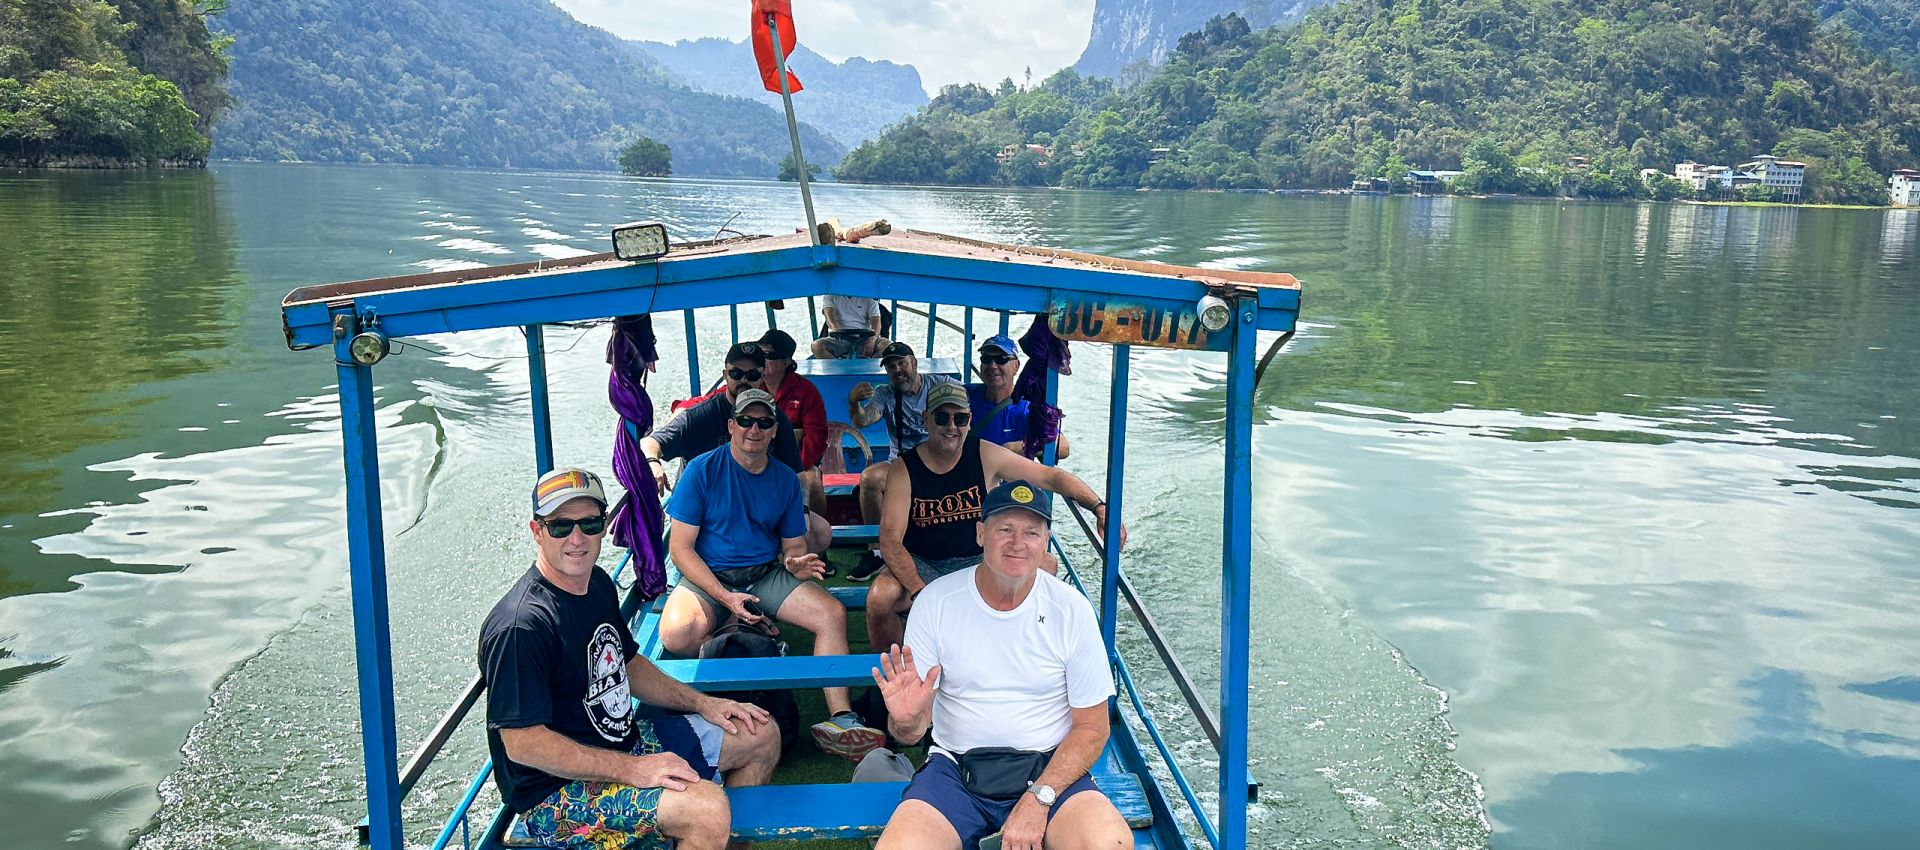 Vietnam Adventure Tour - 3 Day Escape To Ba Bể Lake